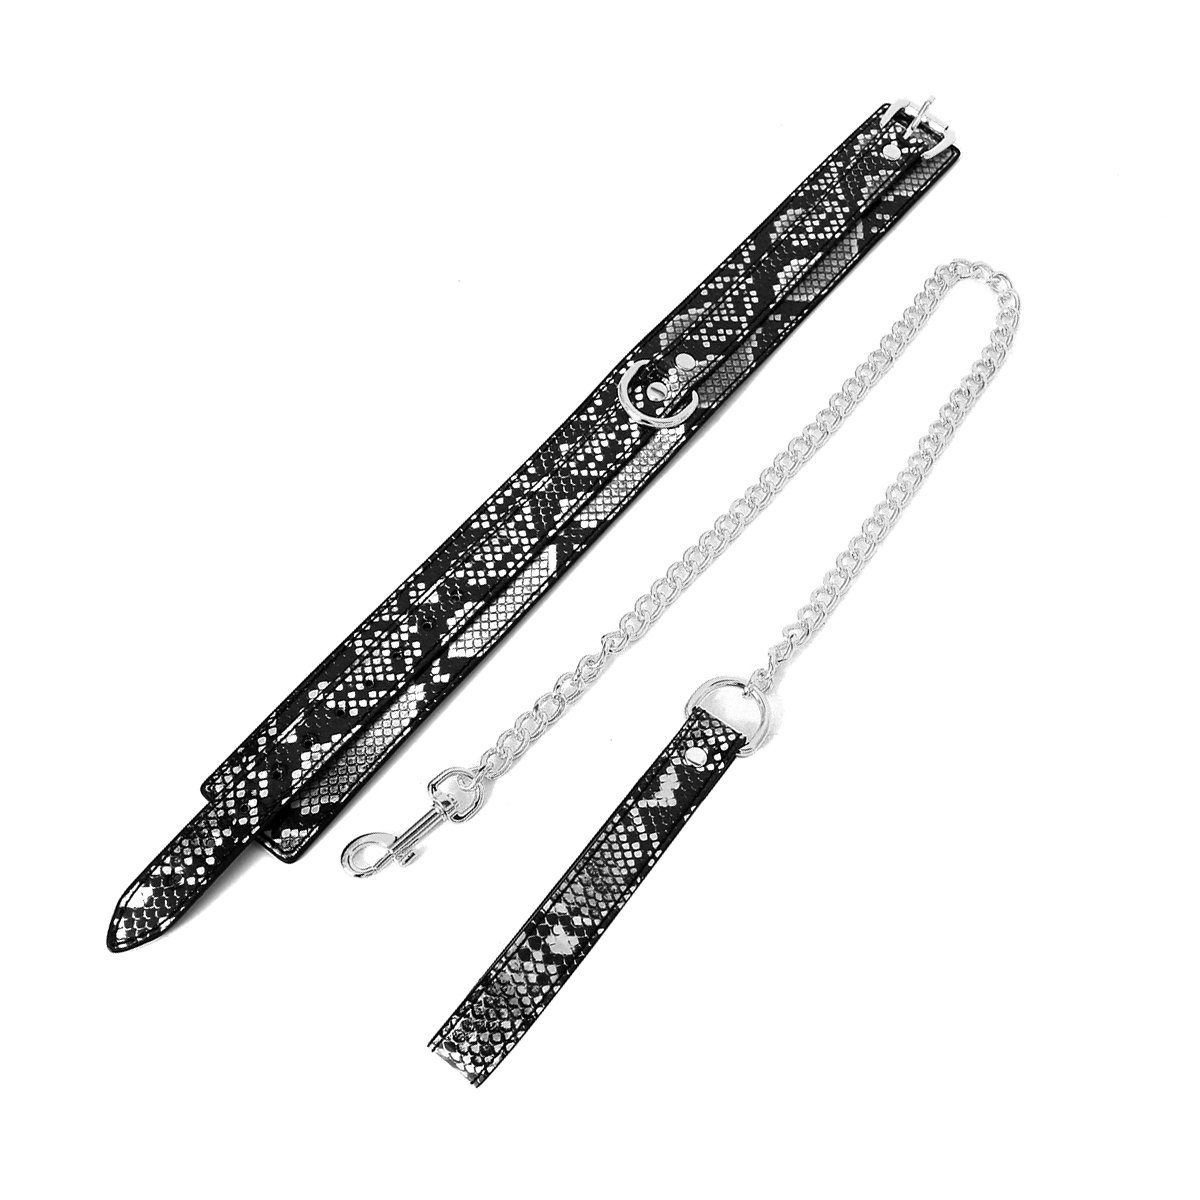 KIOTOS Bondage-Band Collar Black/Silver Reptile with Leash